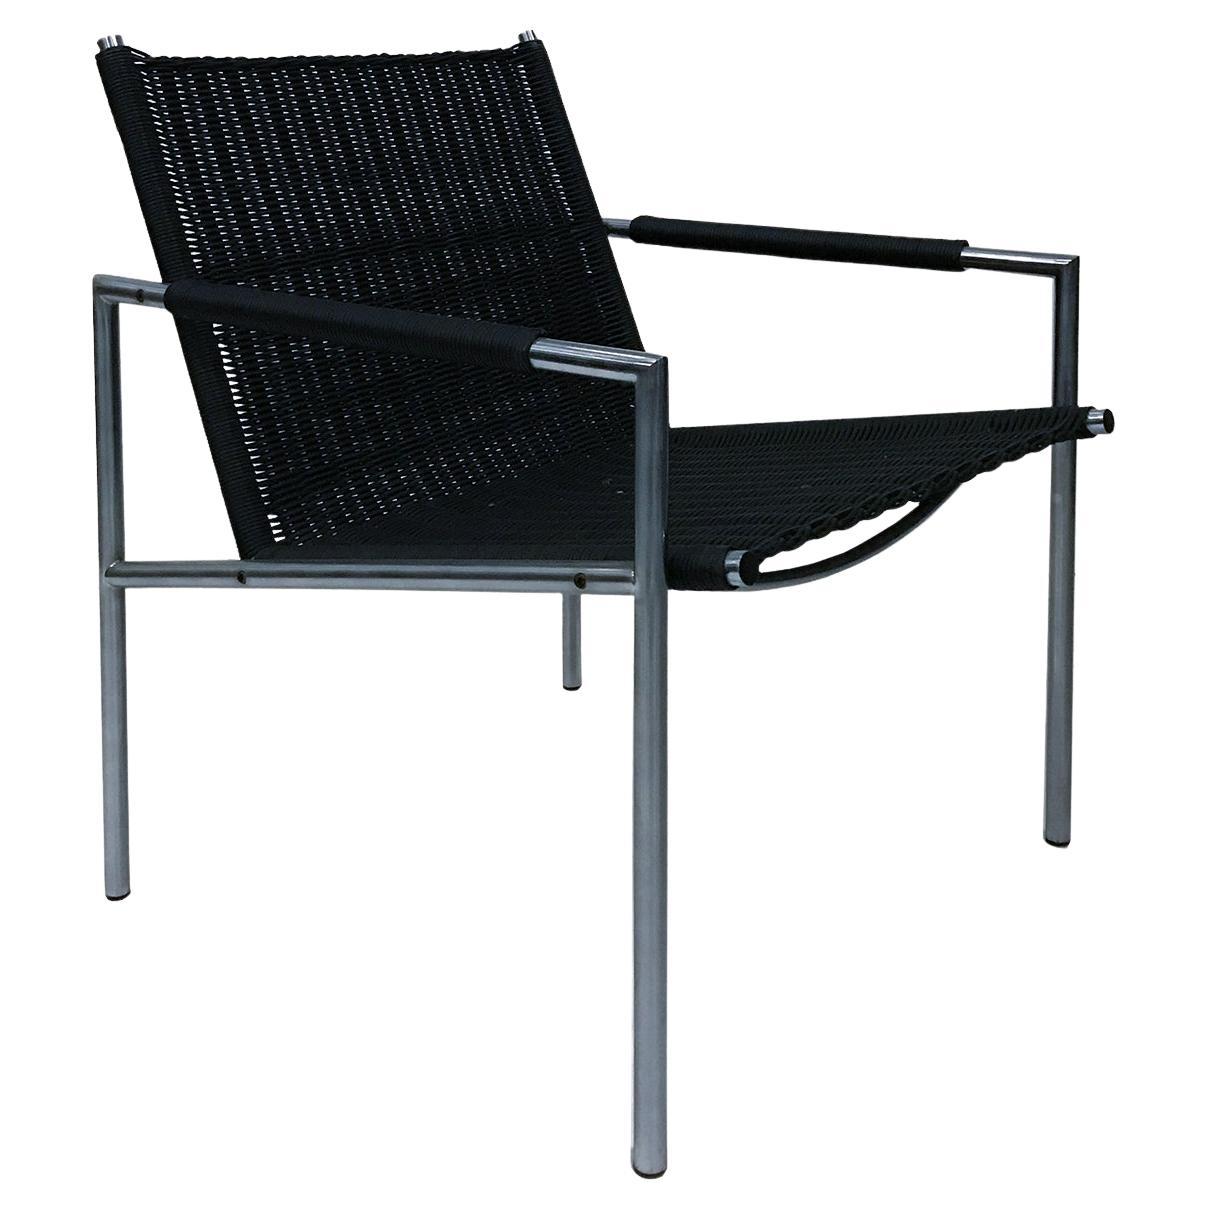 1965, Martin Visser, SZ01 Tubular Easy Chair in Very Rare Black Artificial Cane